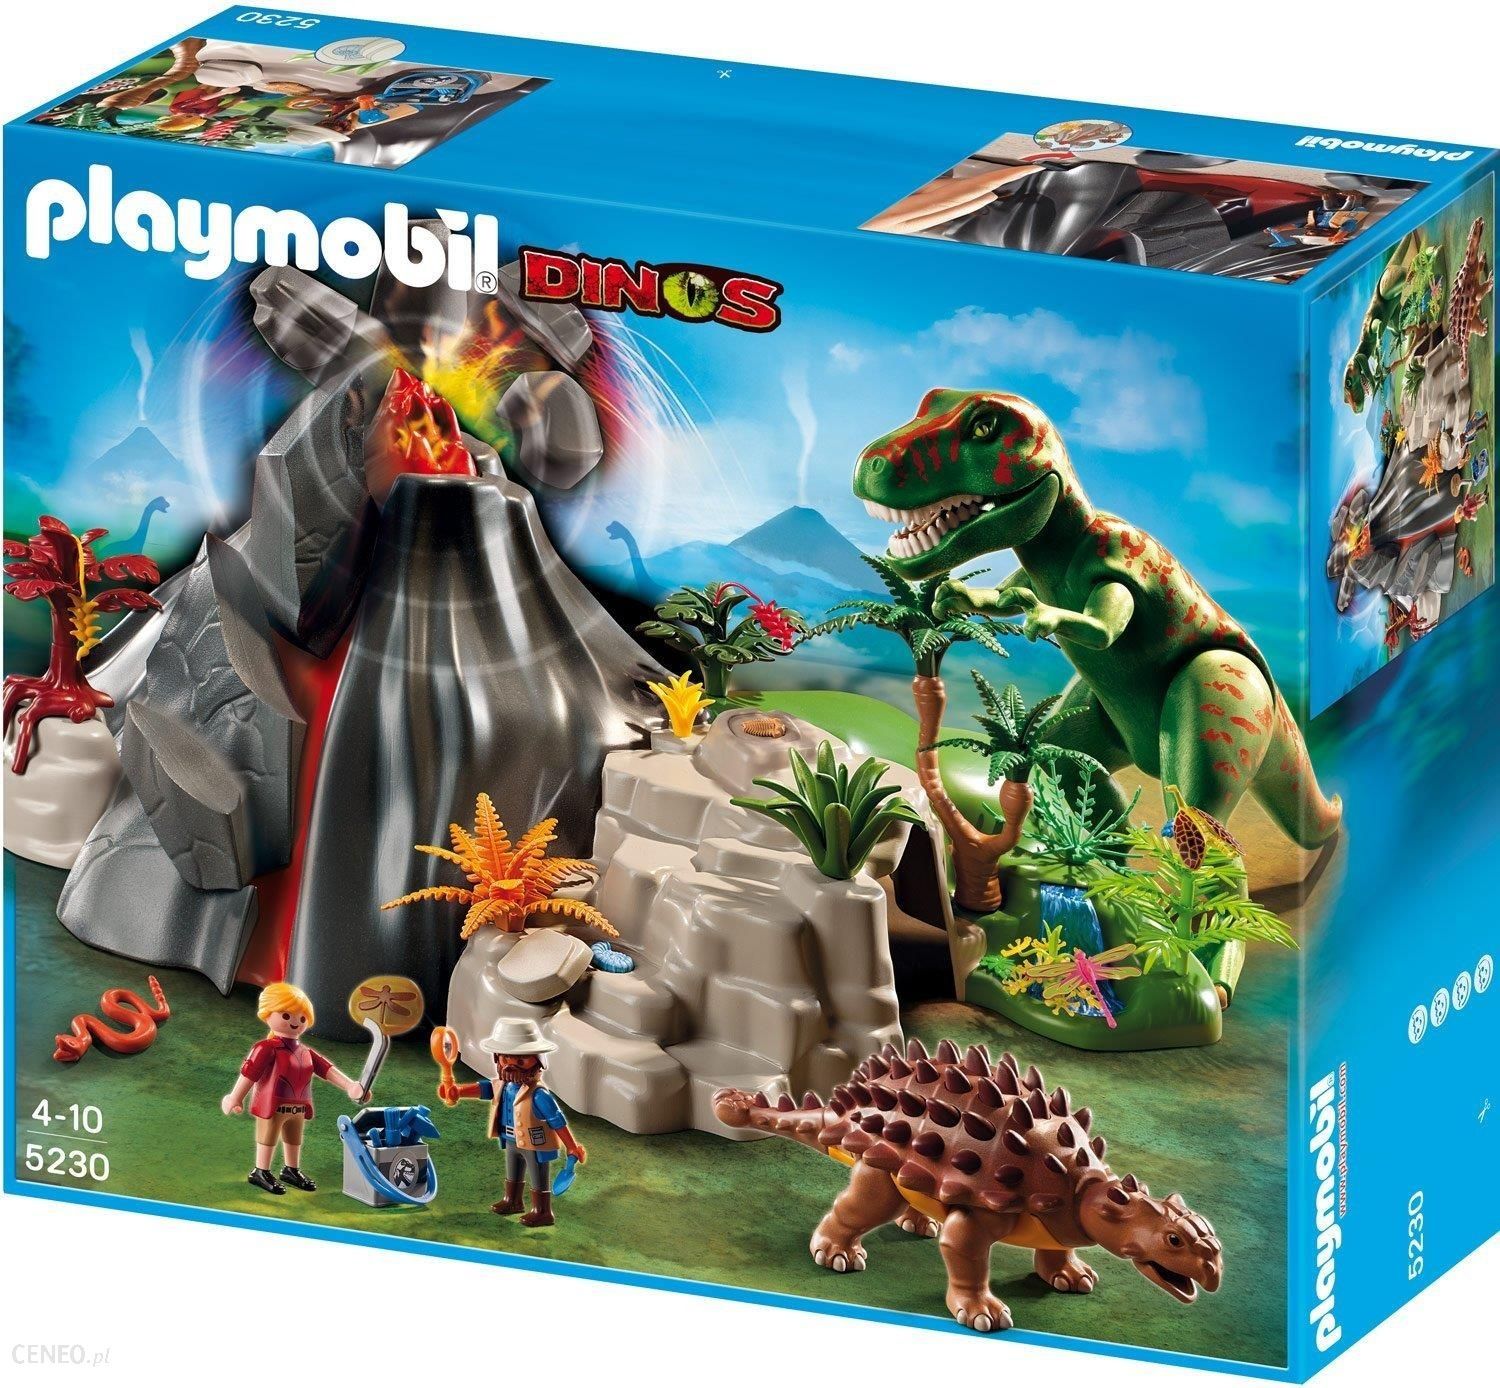 Playmobil - zestaw 5230 (dinozaury i wulkan)